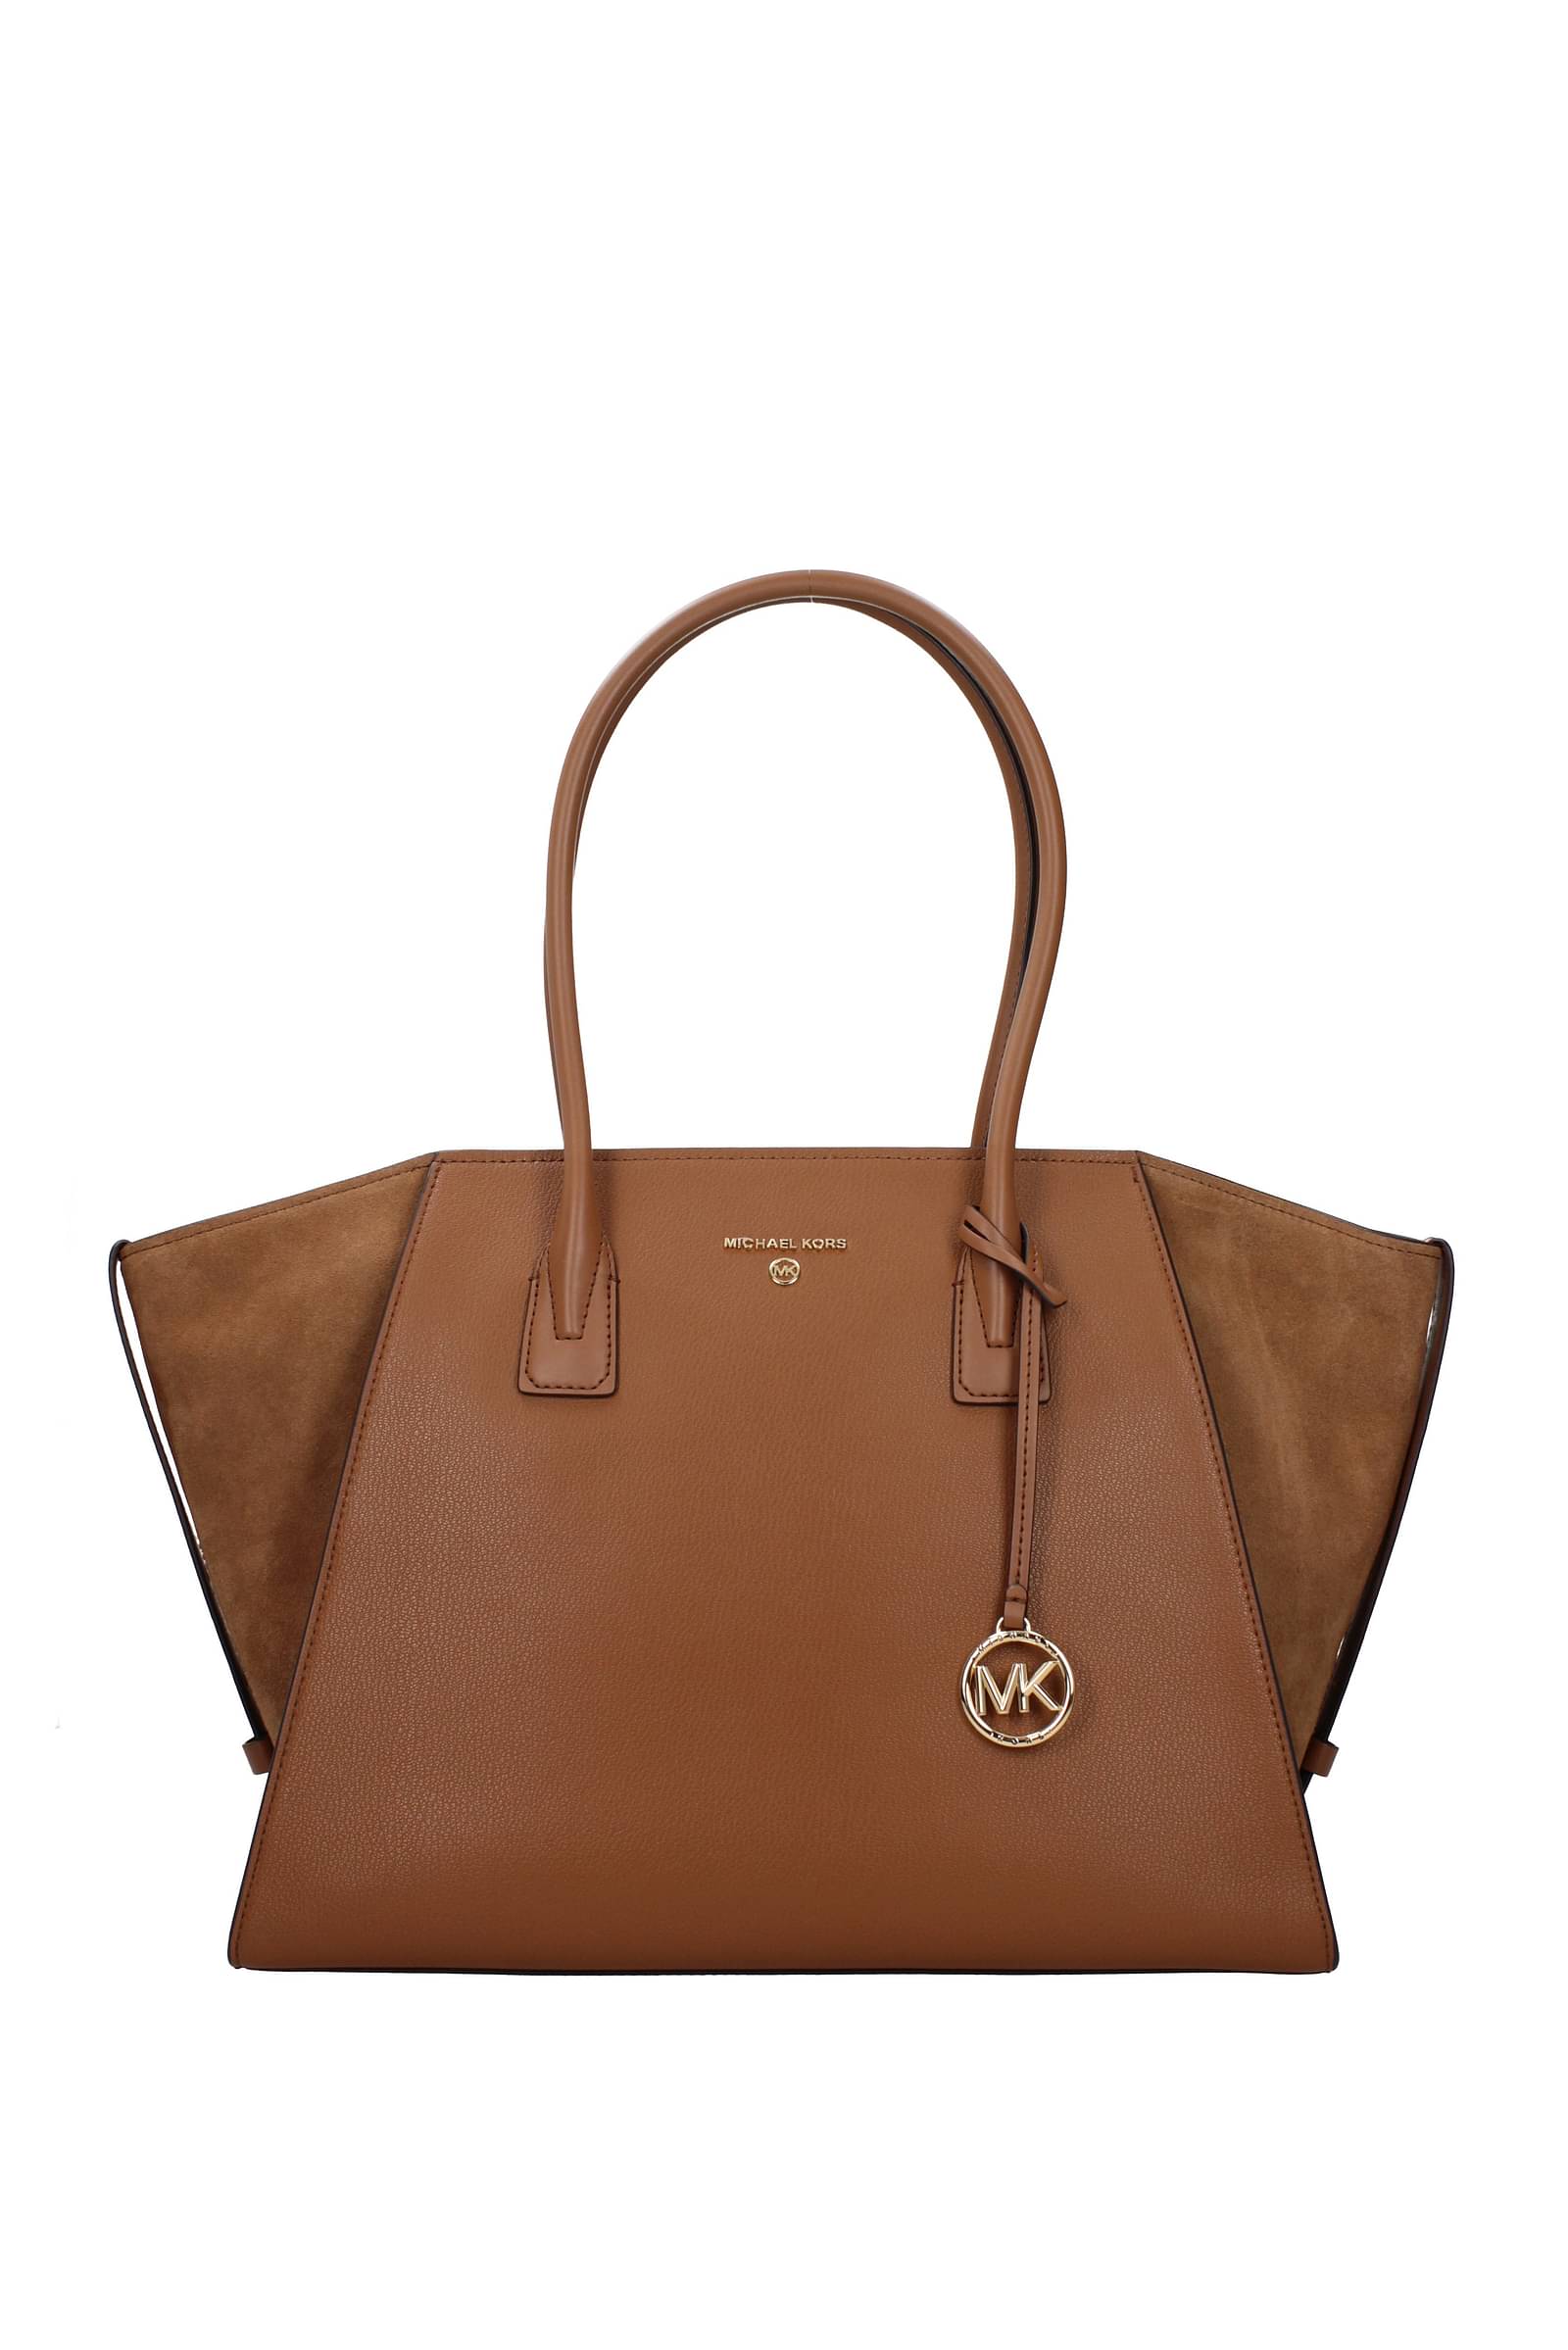 Michael Kors Mirella Medium Pebbled Leather Tote Bag in Brown | Lyst